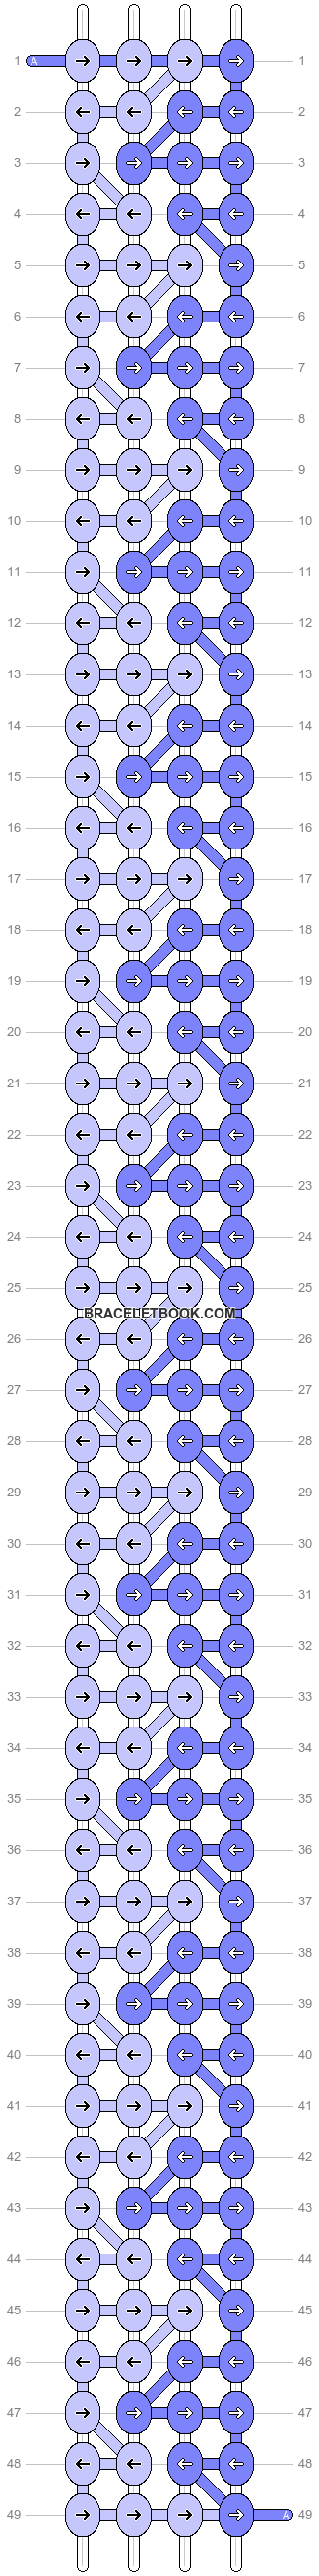 Alpha pattern #16840 pattern